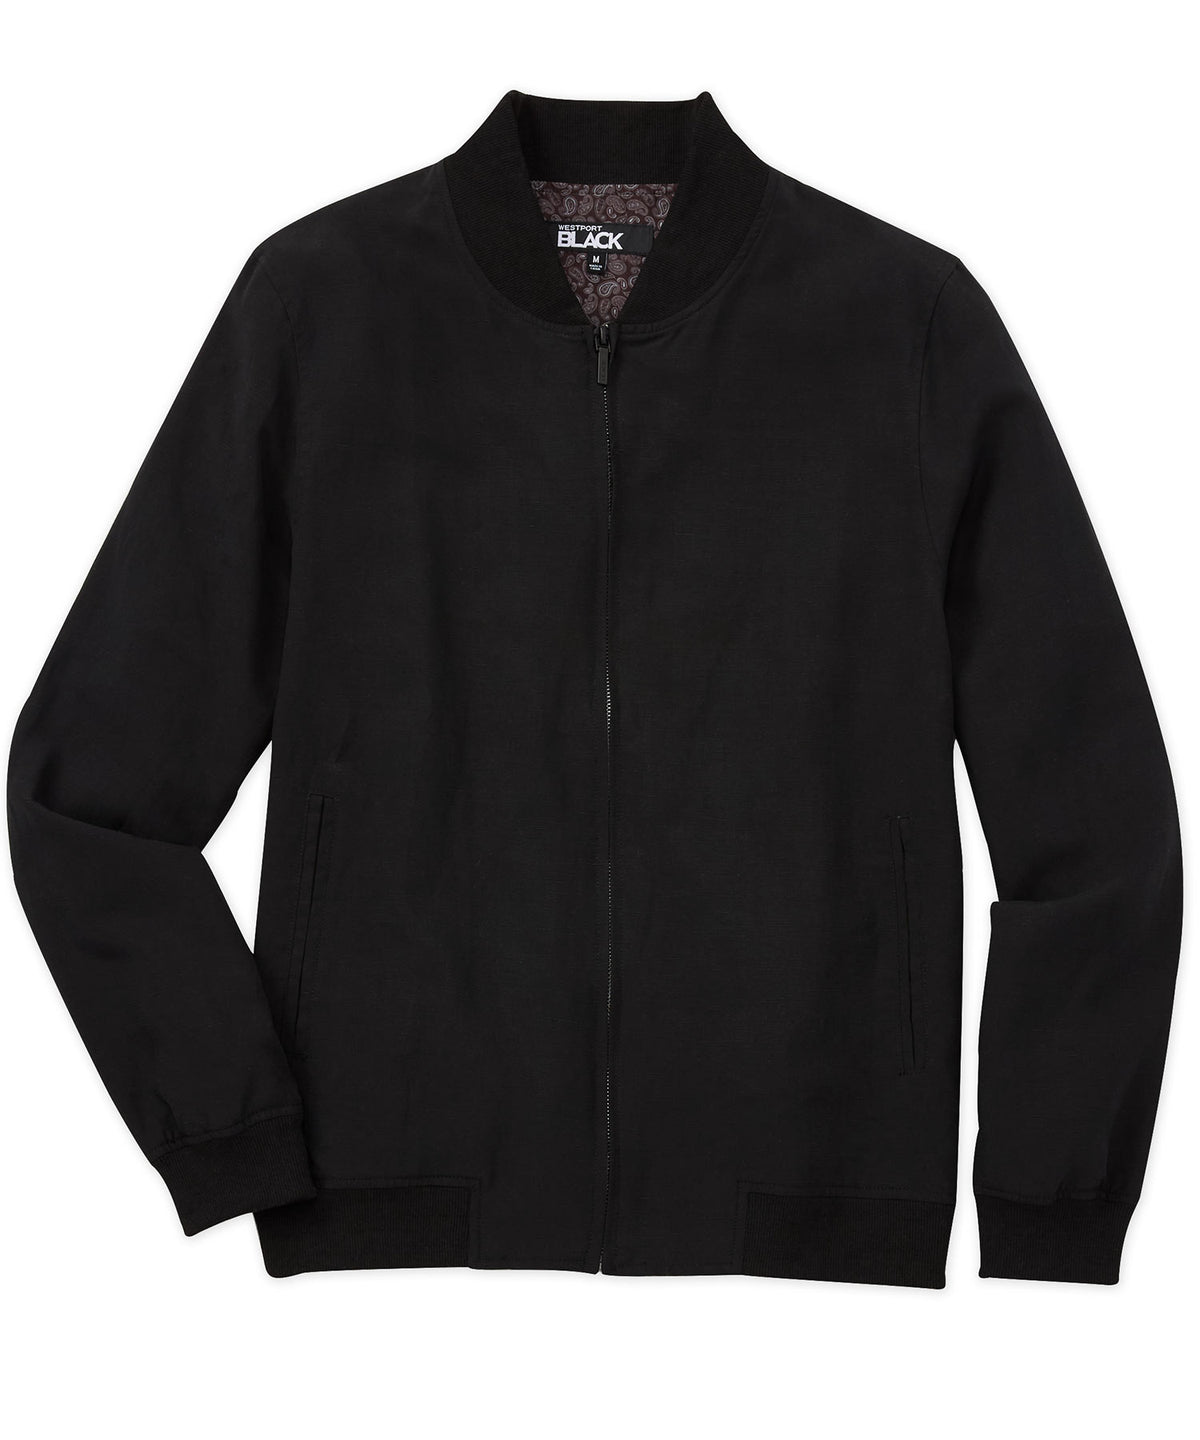 Westport Black Stretch Cotton Blouson Jacket, Men's Big & Tall